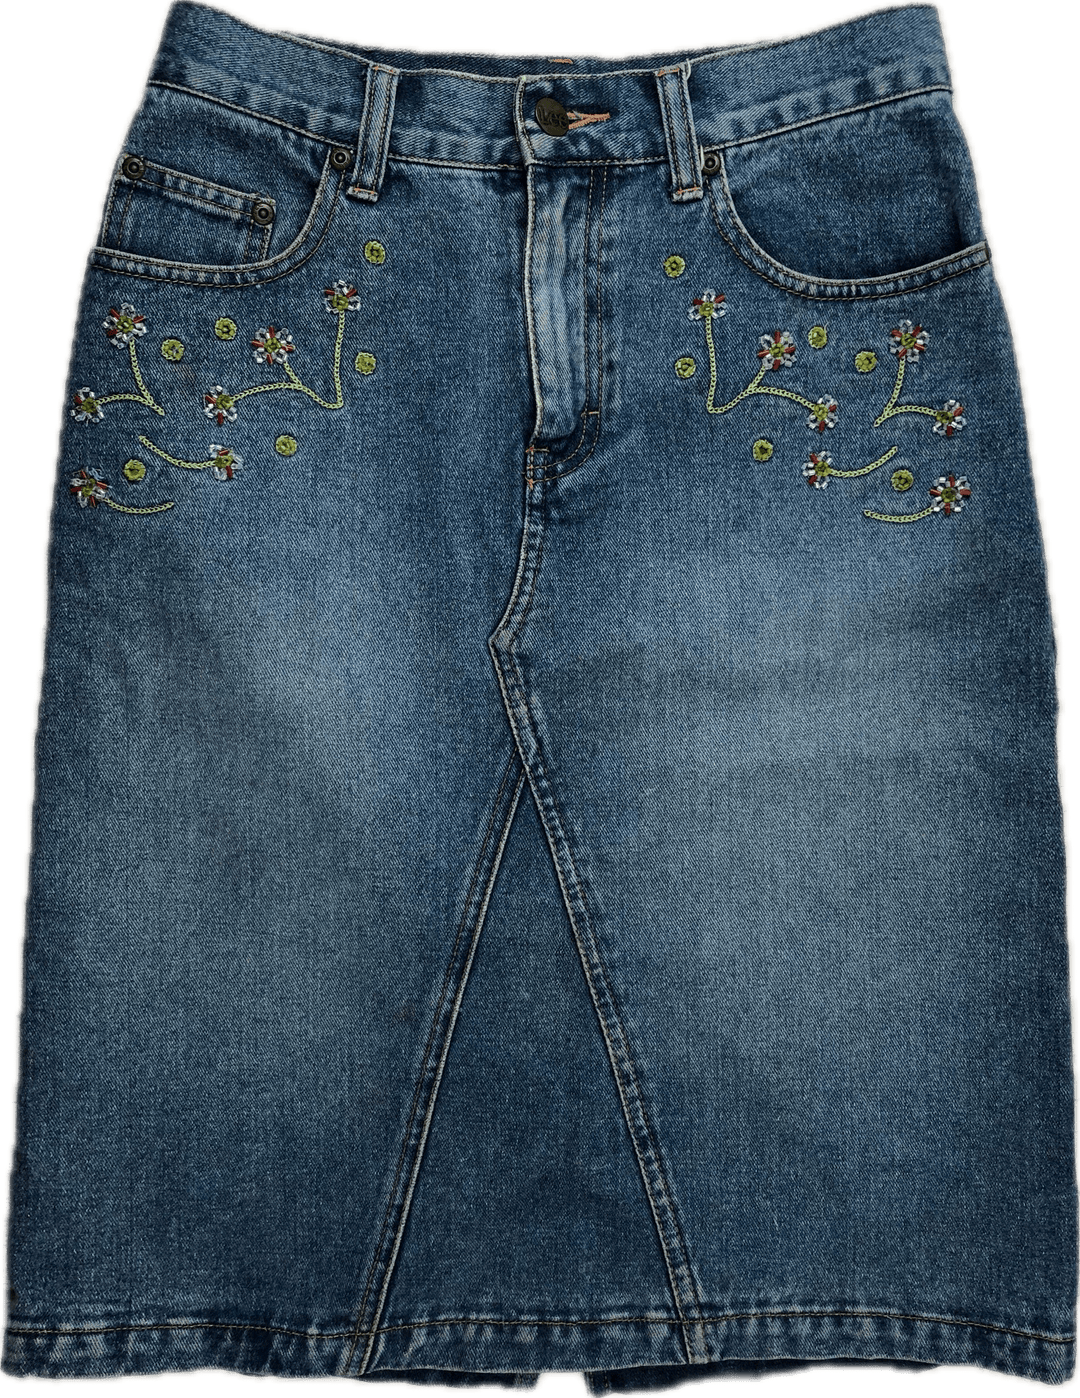 Lee Jewelled & Embroidered Denim Skirt - Size 8 - Jean Pool